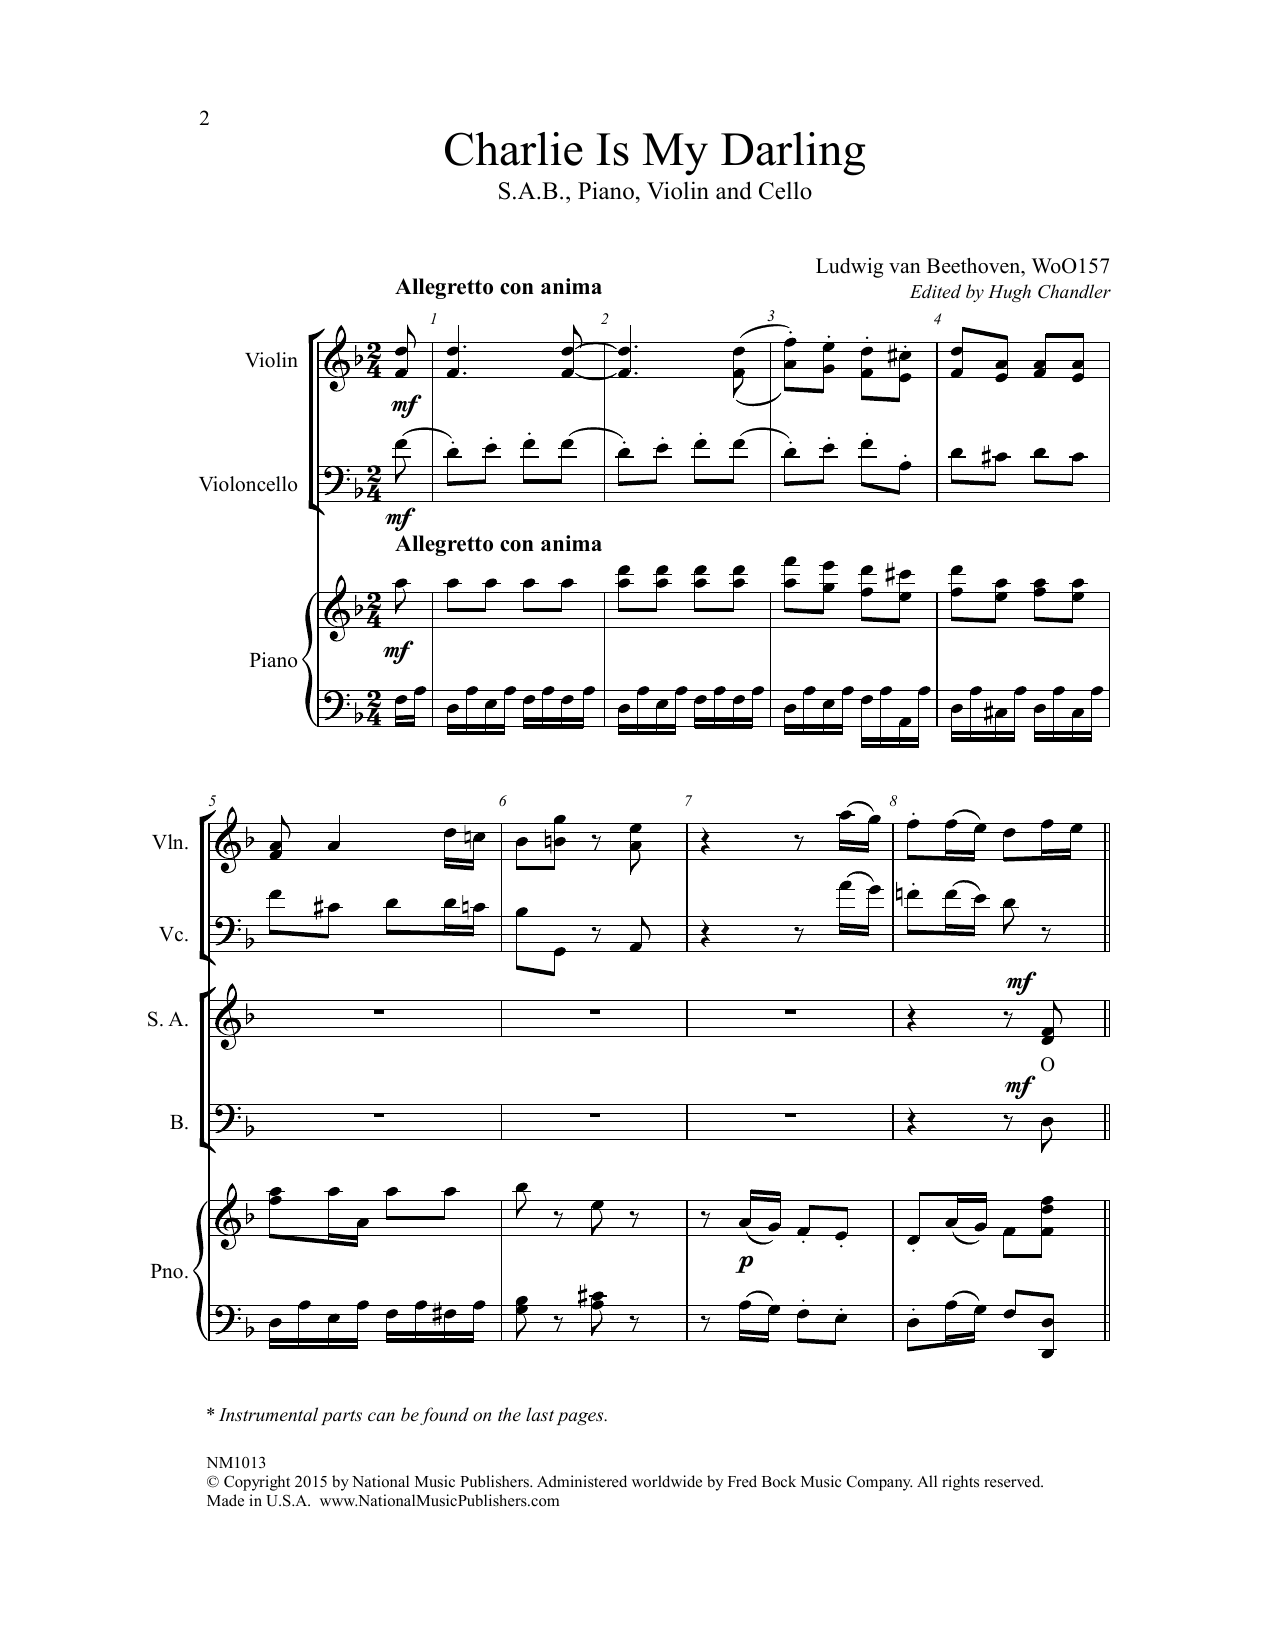 Ludwig van Beethoven Charlie Is My Darling (ed. Hugh Chandler) sheet music notes and chords arranged for SAB Choir